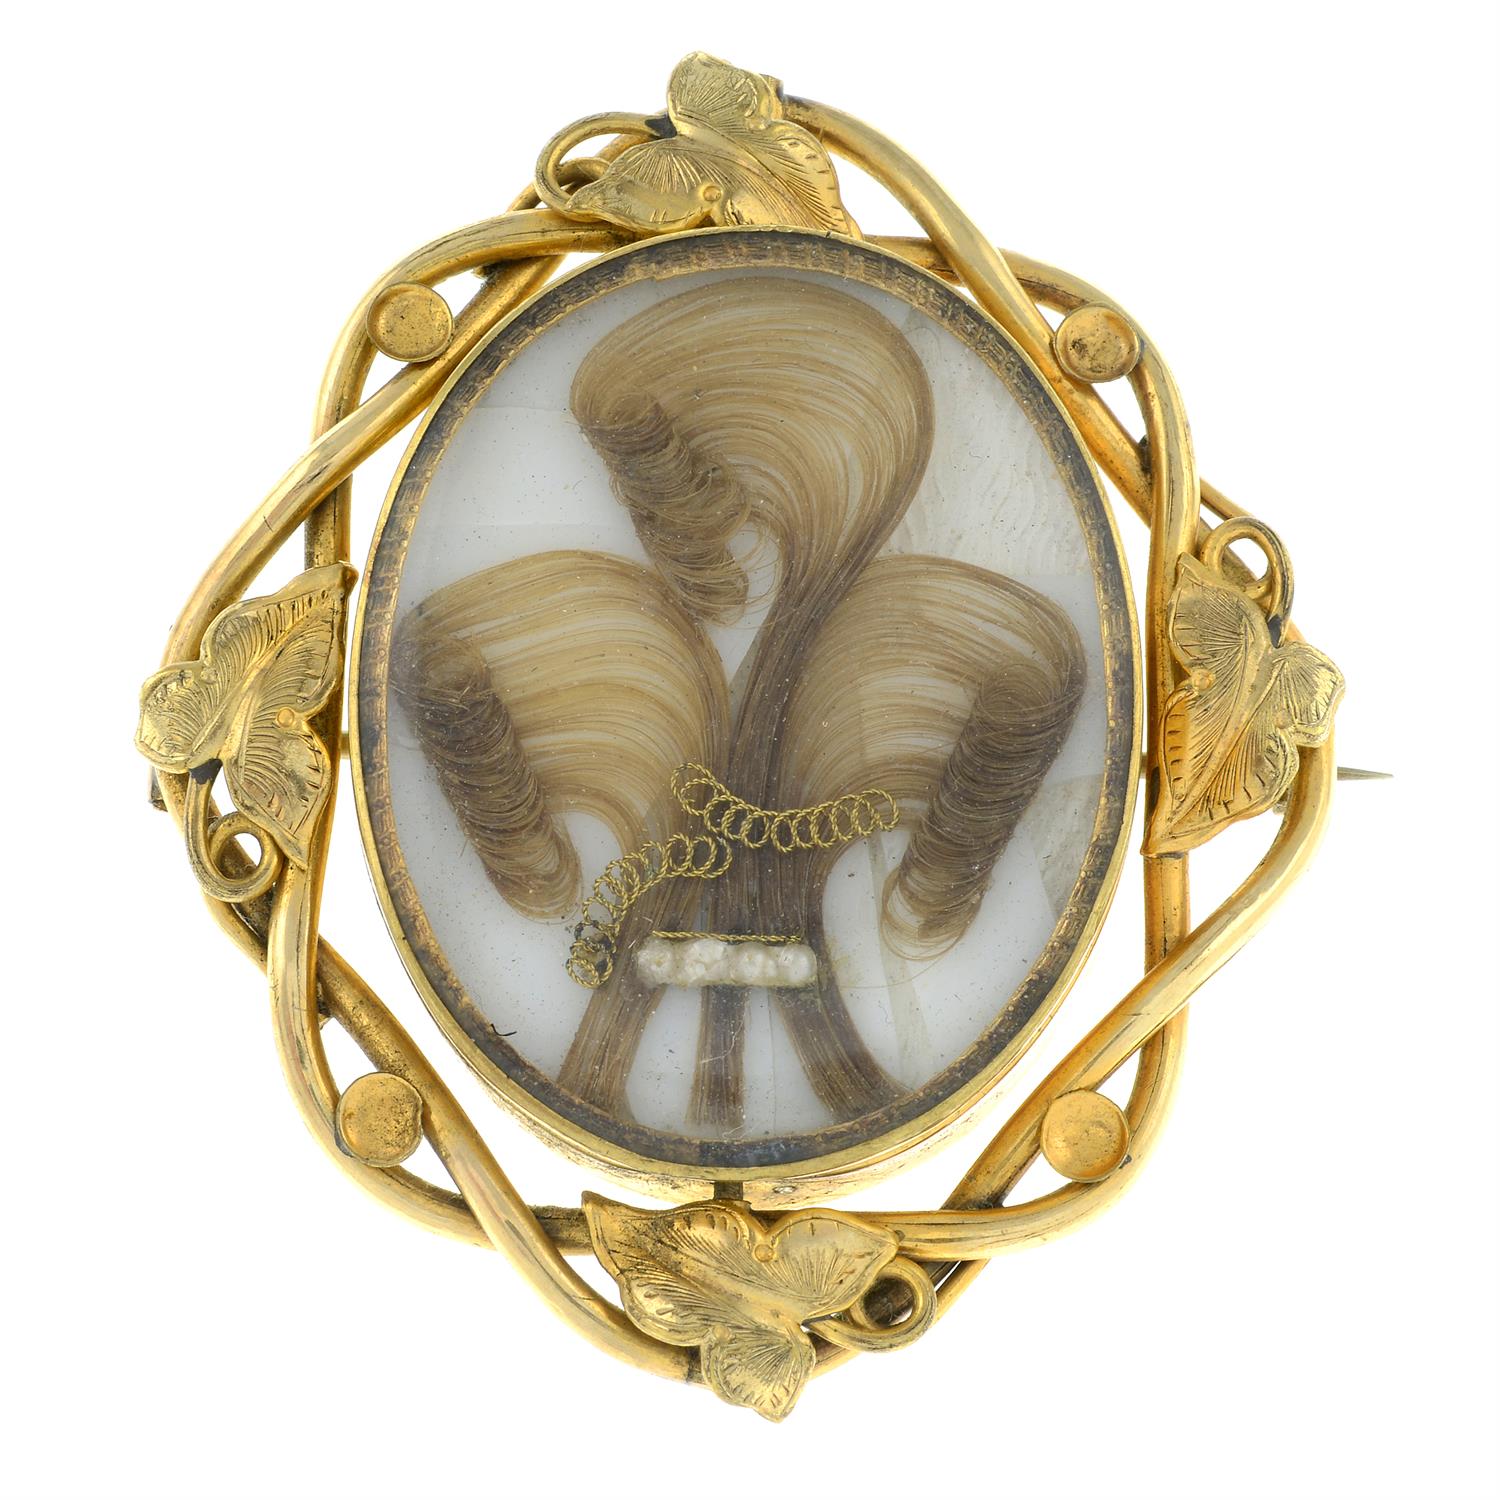 Late 19th century gilted metal hairwork swivel memorial brooch